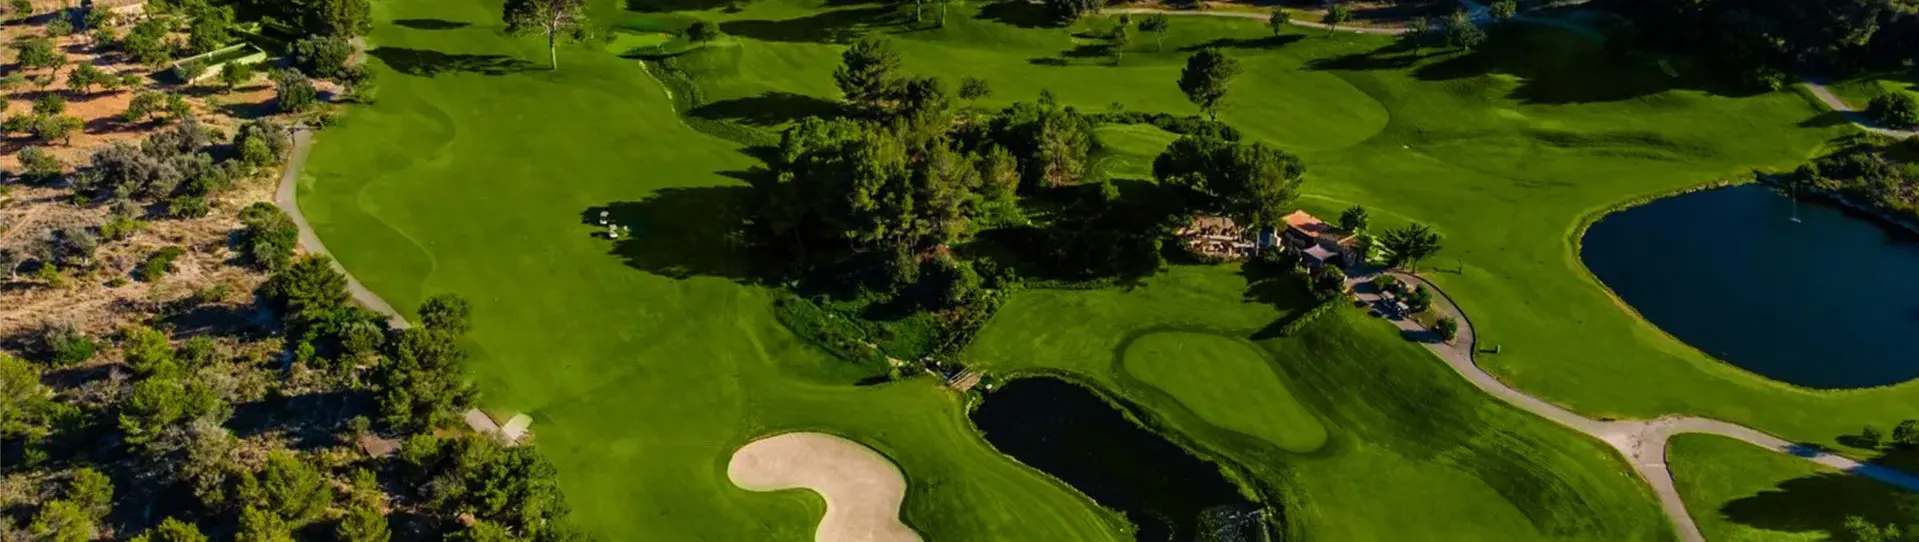 Spain golf courses - Andratx Golf Course - Photo 1